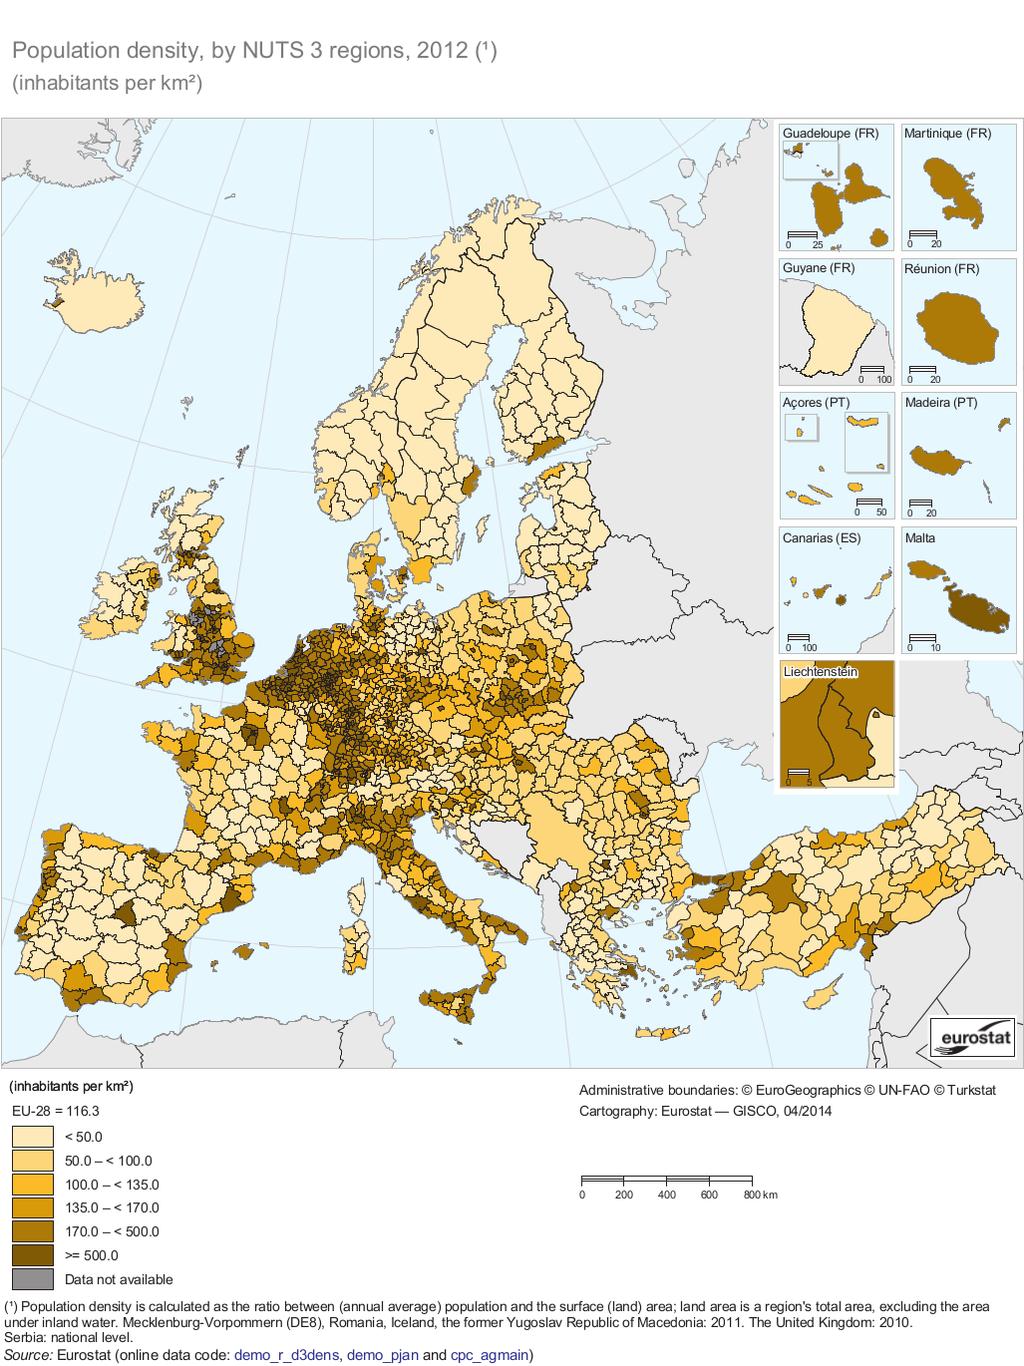 Figure 4: Regional variation in population density across the European Union.